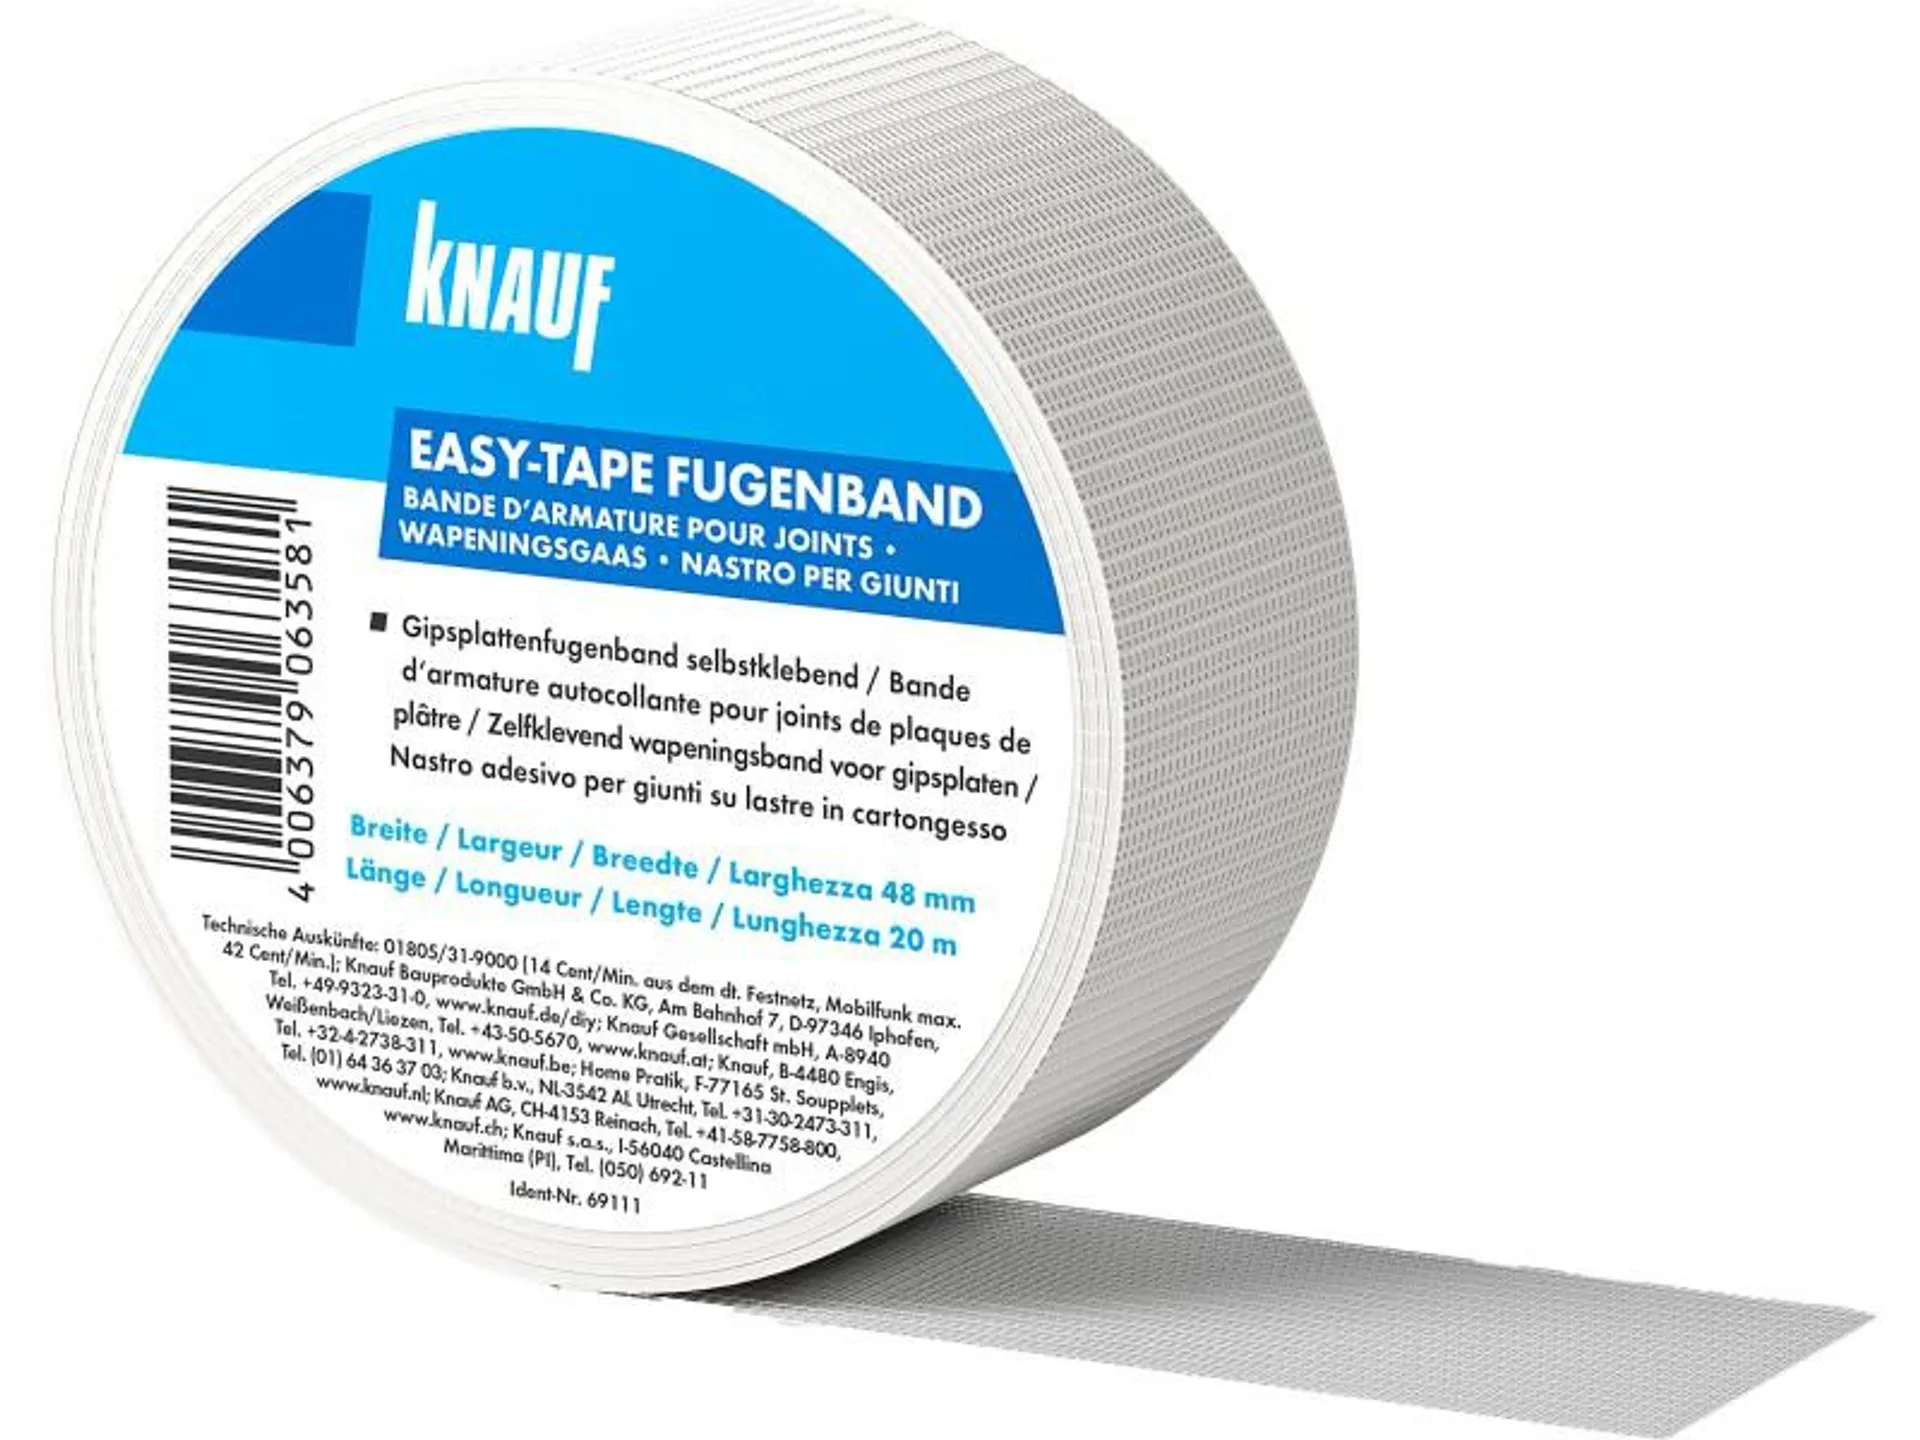 Knauf Easy-Tape Fugenband 48/20 selbstklebend 20 m